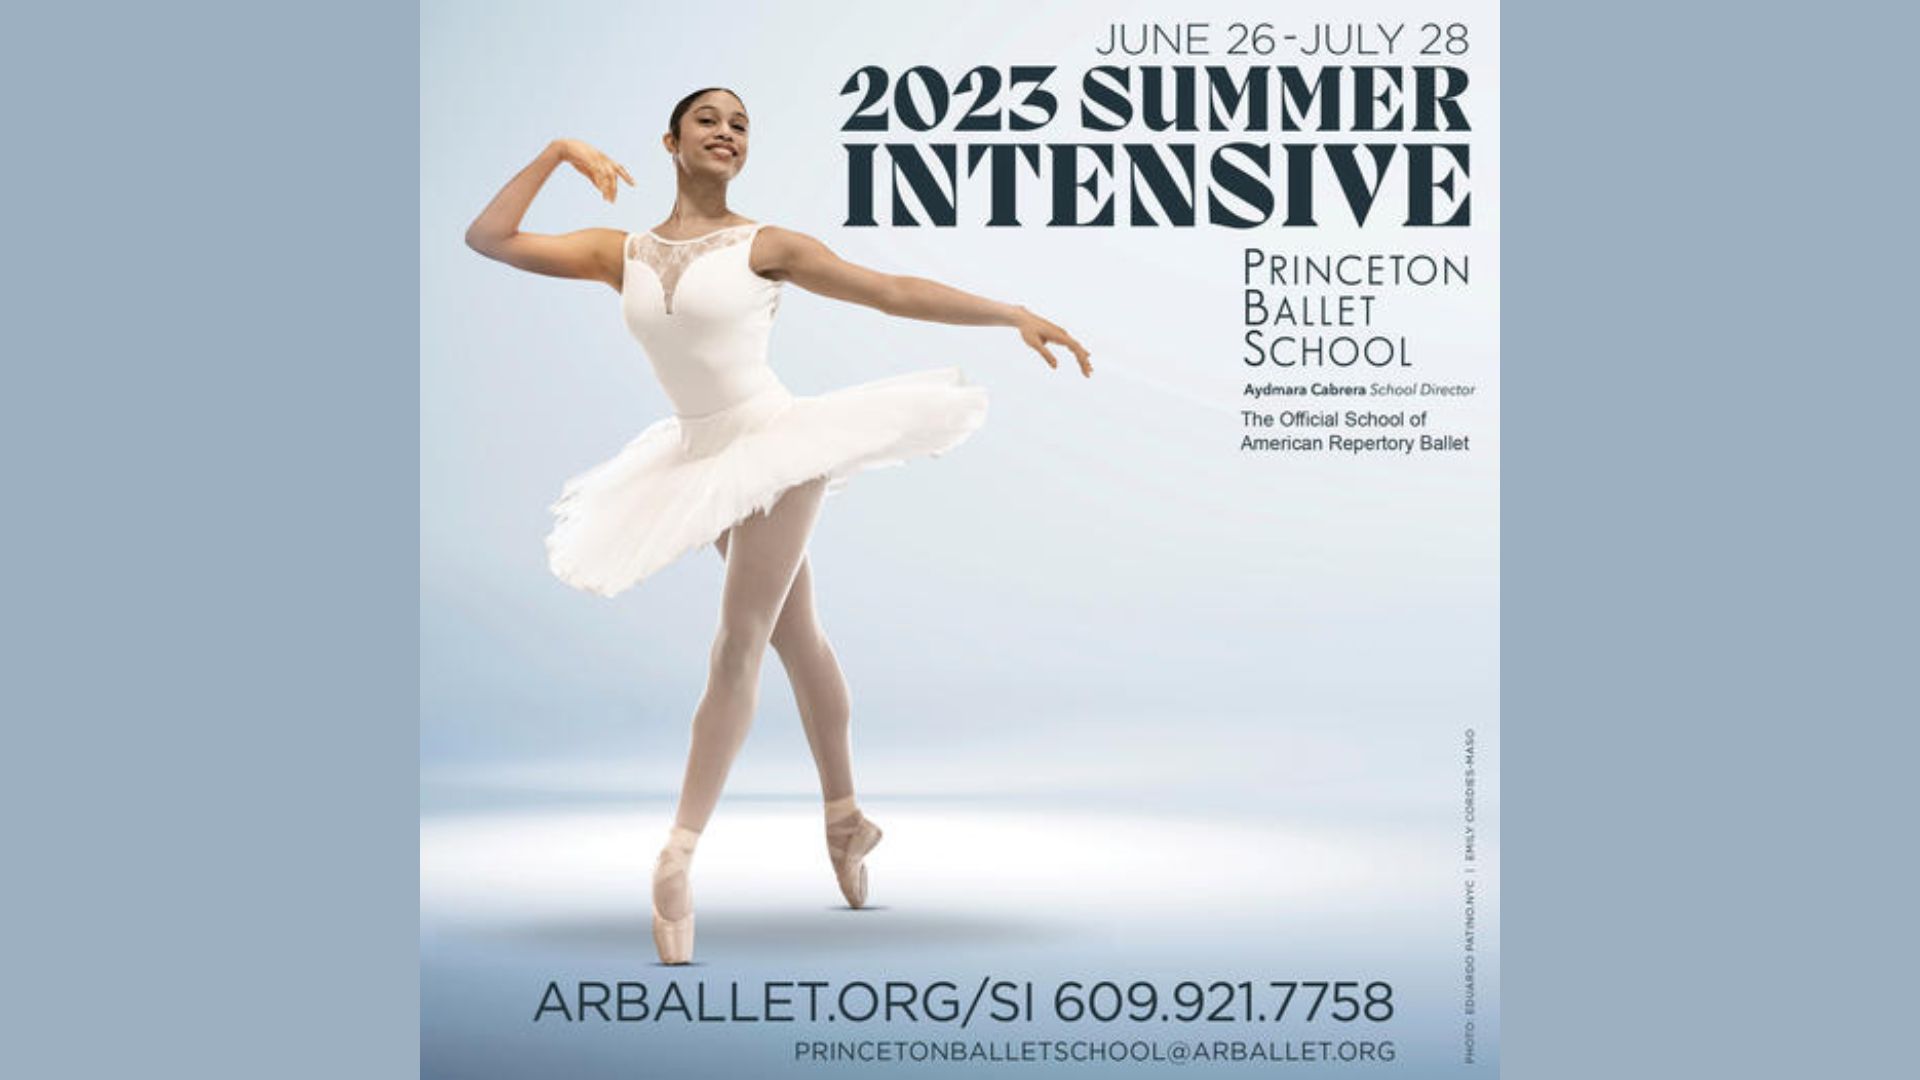 Princeton Ballet School’s Advanced Summer Intensive